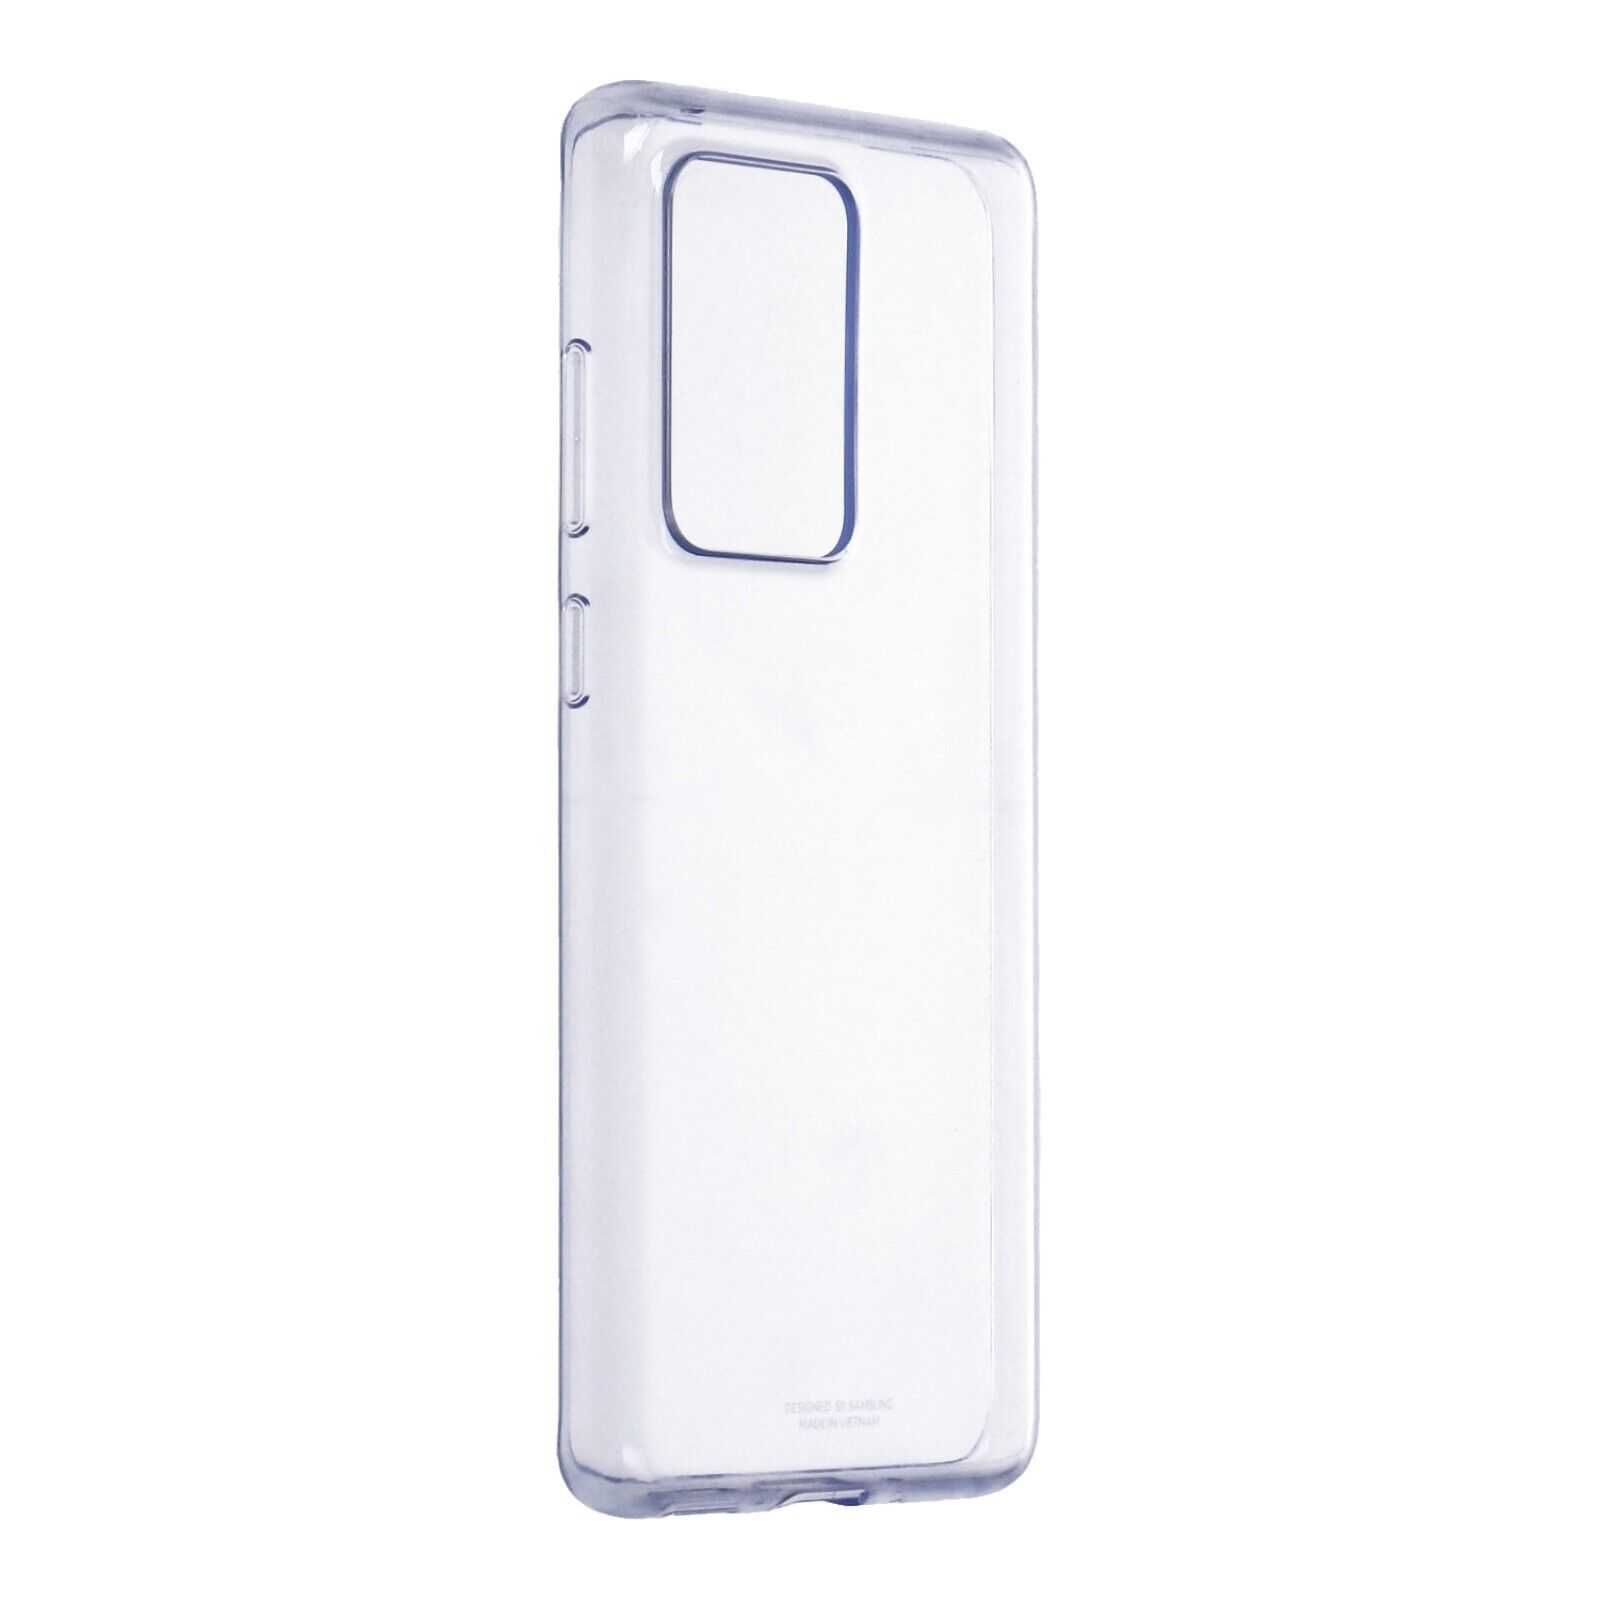 Оригинальный чехол Samsung Galaxy S20 Ultra Clear Cover SM-G988